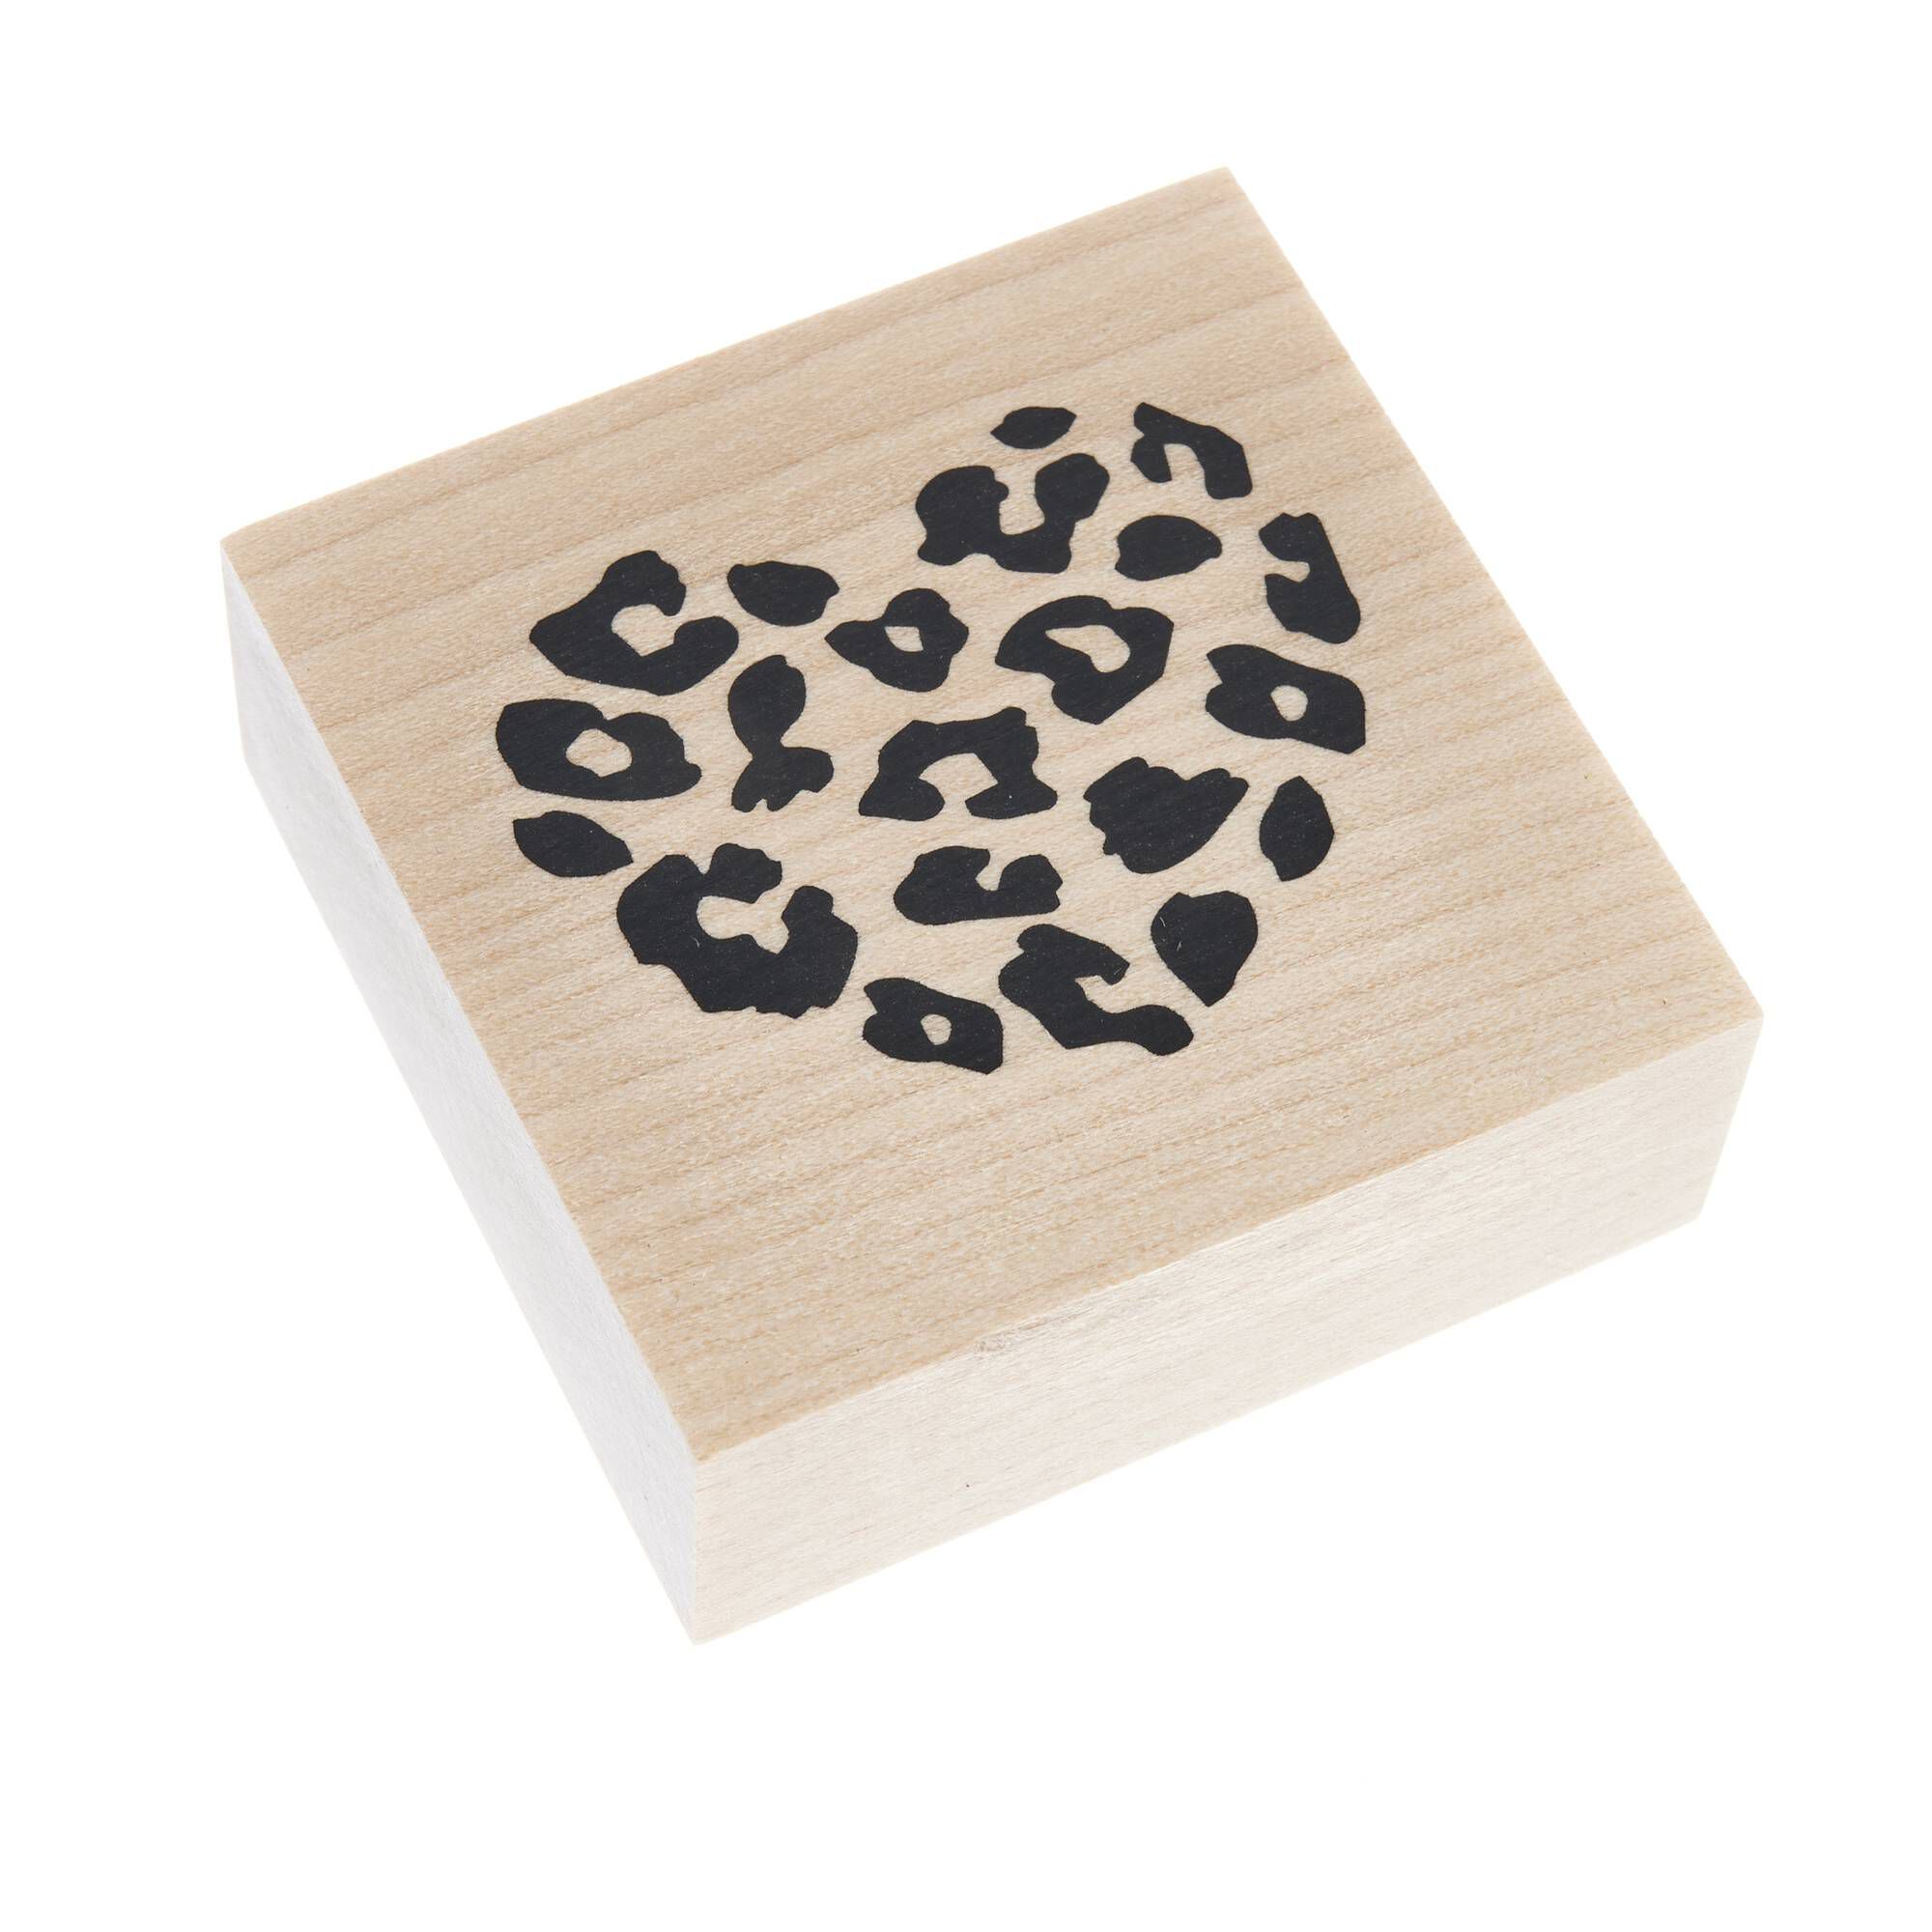 Cliocoo 27pcs Shapes Lines Wood Rubber Stamp Set M-11 